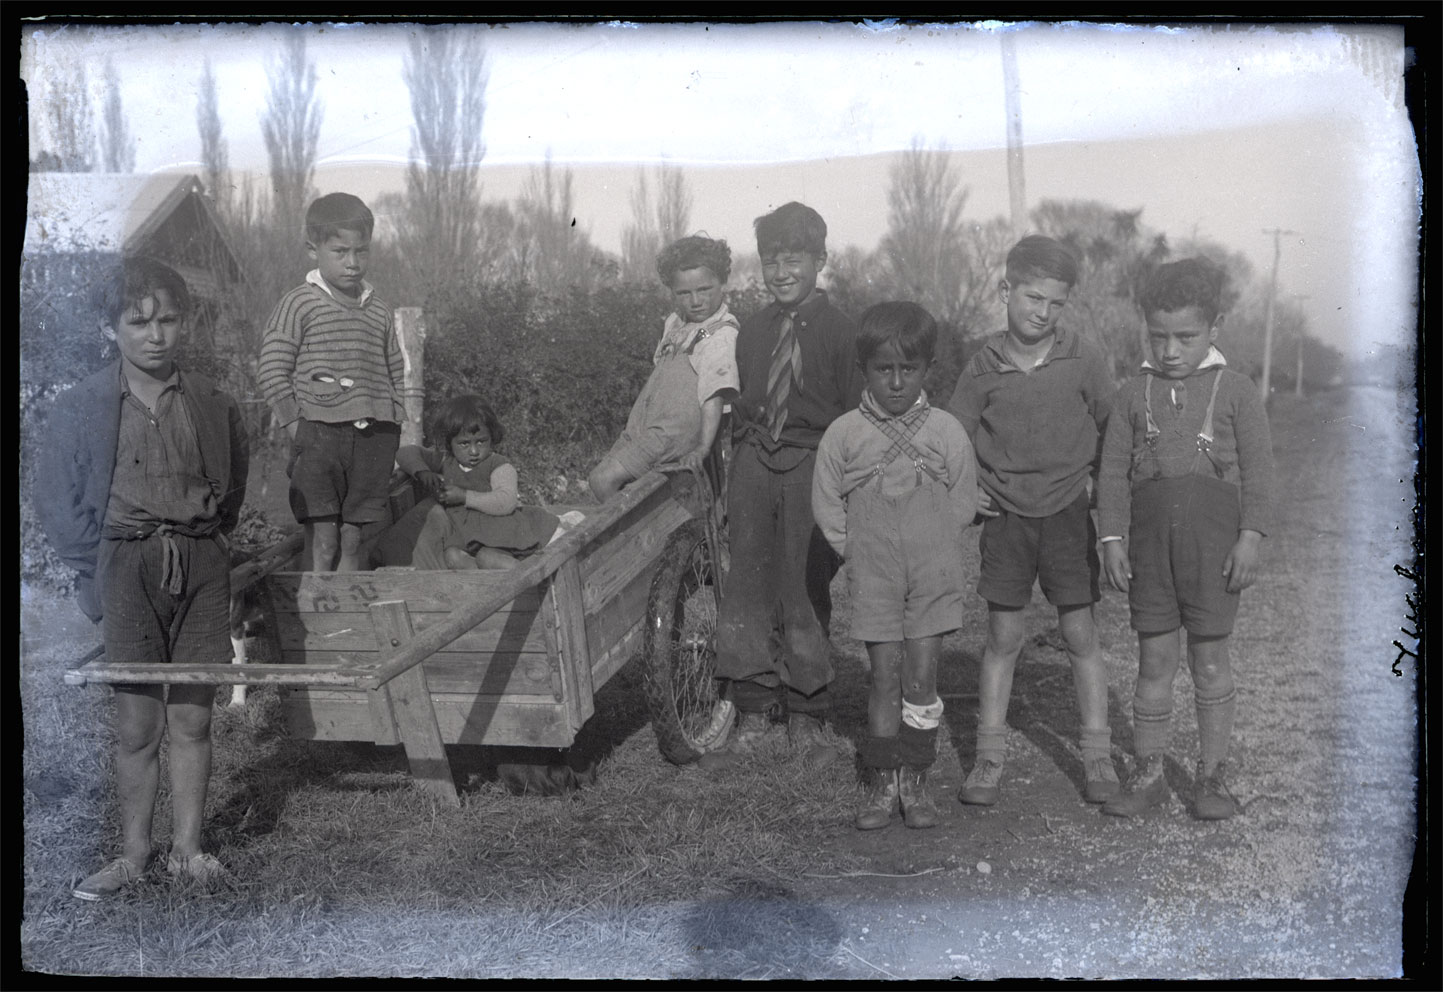 <p>Tamariki at Tuahiwi, c.1936. Left to right: Joe Howse, Mutu Hopkinson, Iola Croft, Trevor Howse, Charles Barrett, Dominic Croft, Gerald Howse and Jono Croft. W.A. Taylor Collection, Canterbury Museum, 1968.213.3207</p>